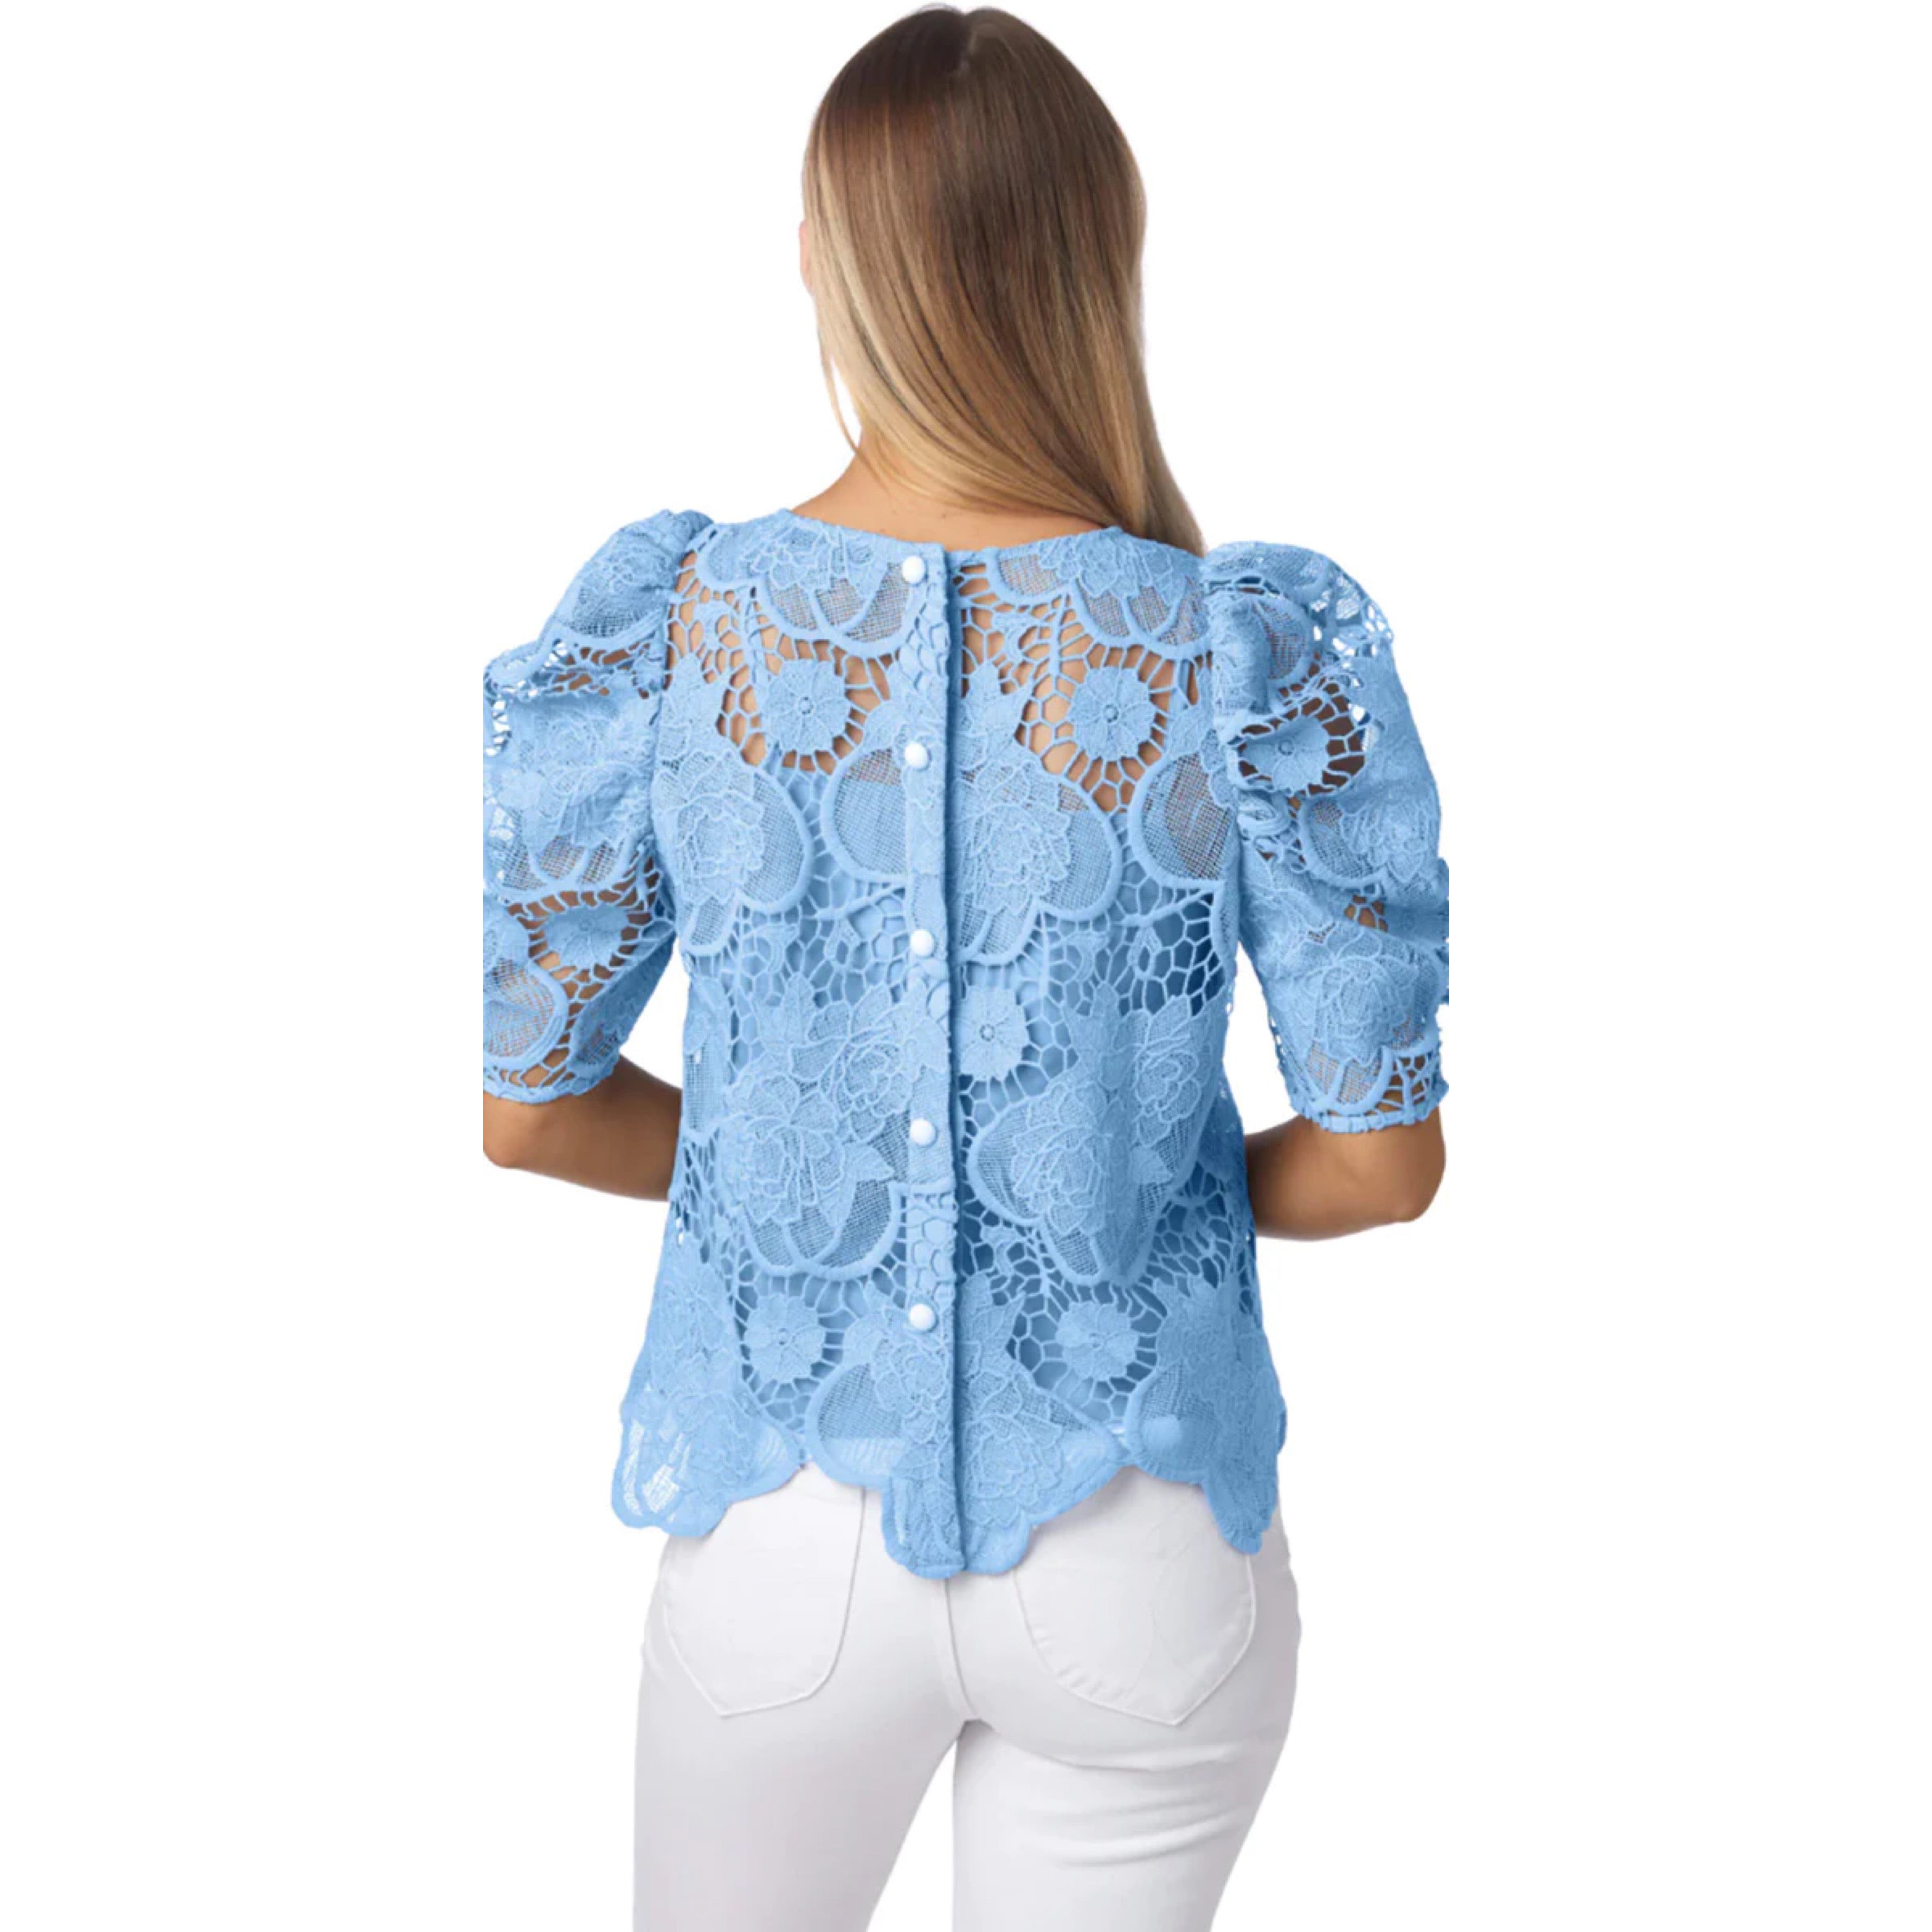 Crosby light blue lace blouse, size S